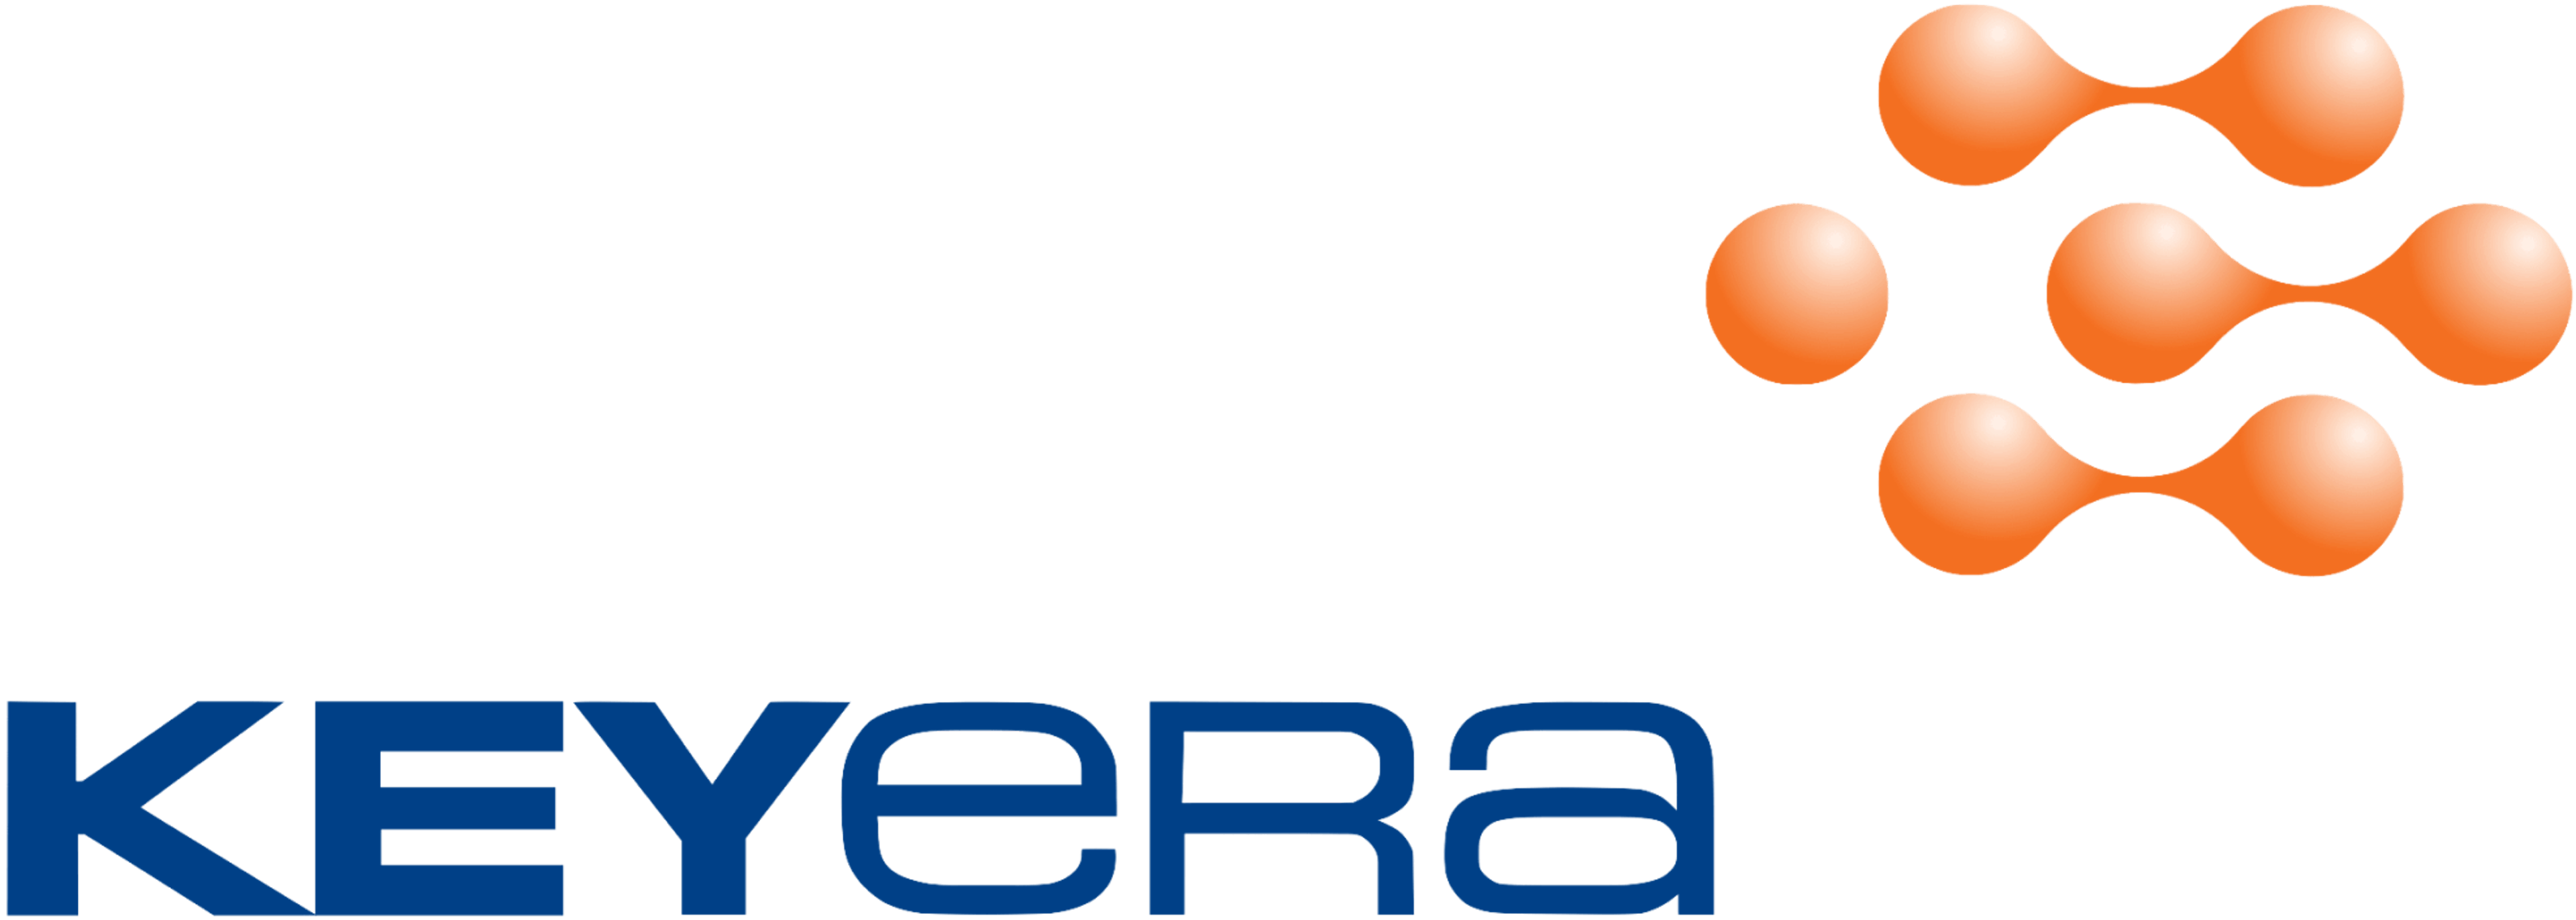 Keyera logo on transparent background